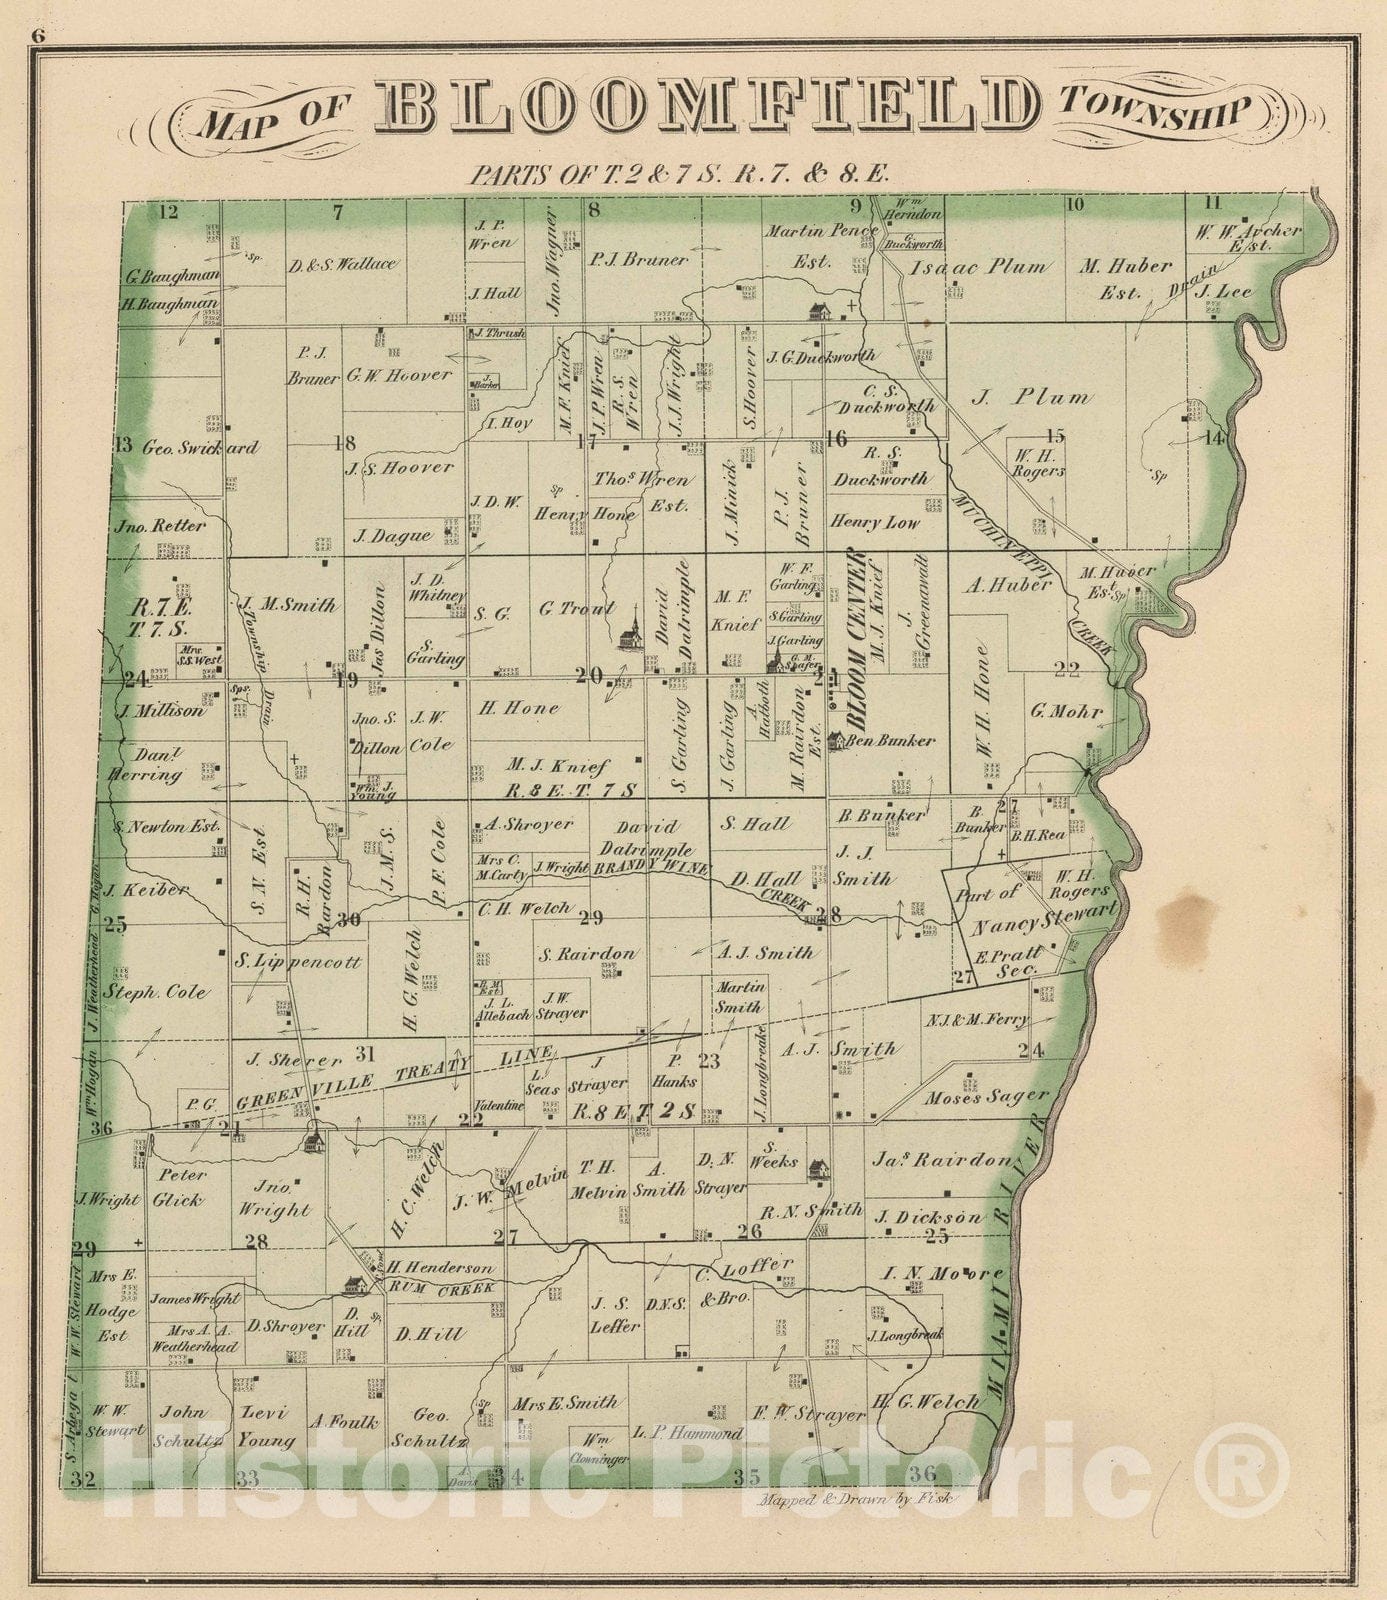 Historic Map : 1875 Bloomfield Township, Logan County, Ohio. - Vintage Wall Art